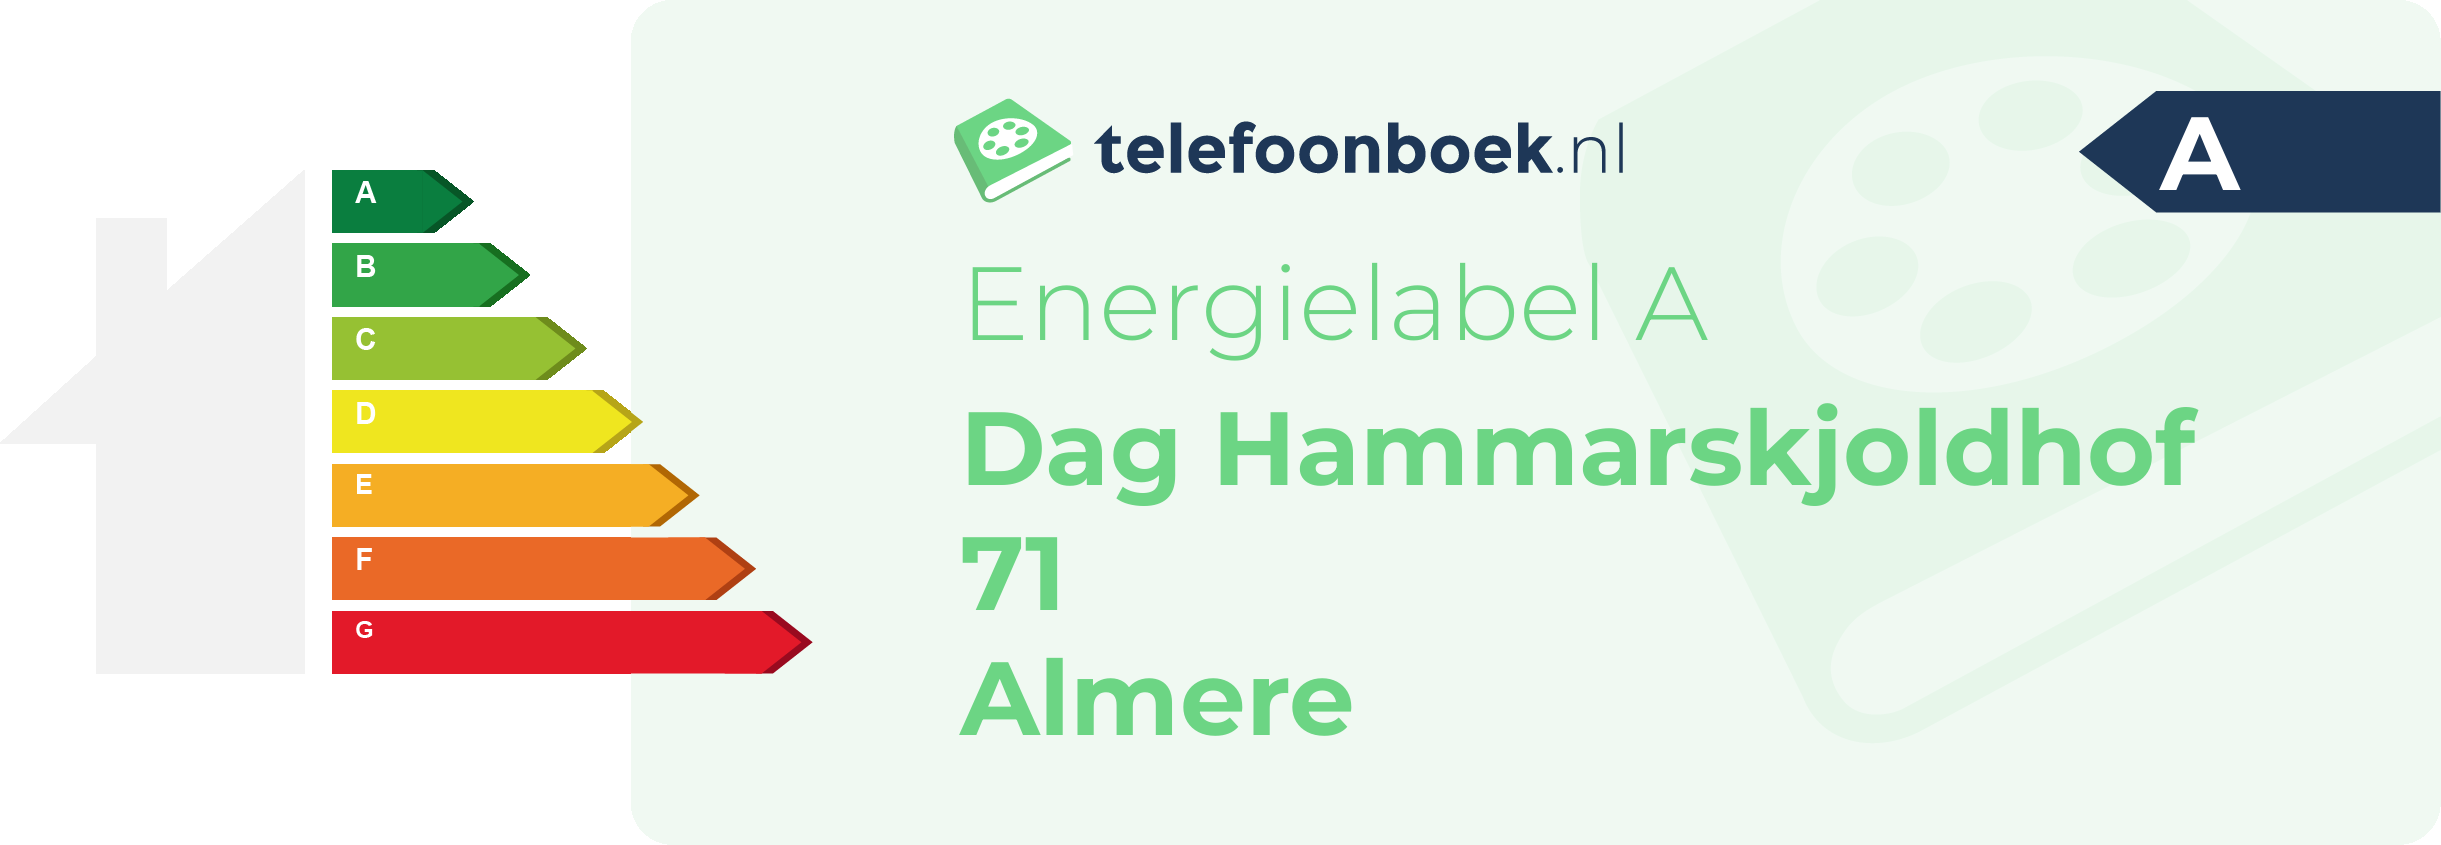 Energielabel Dag Hammarskjoldhof 71 Almere